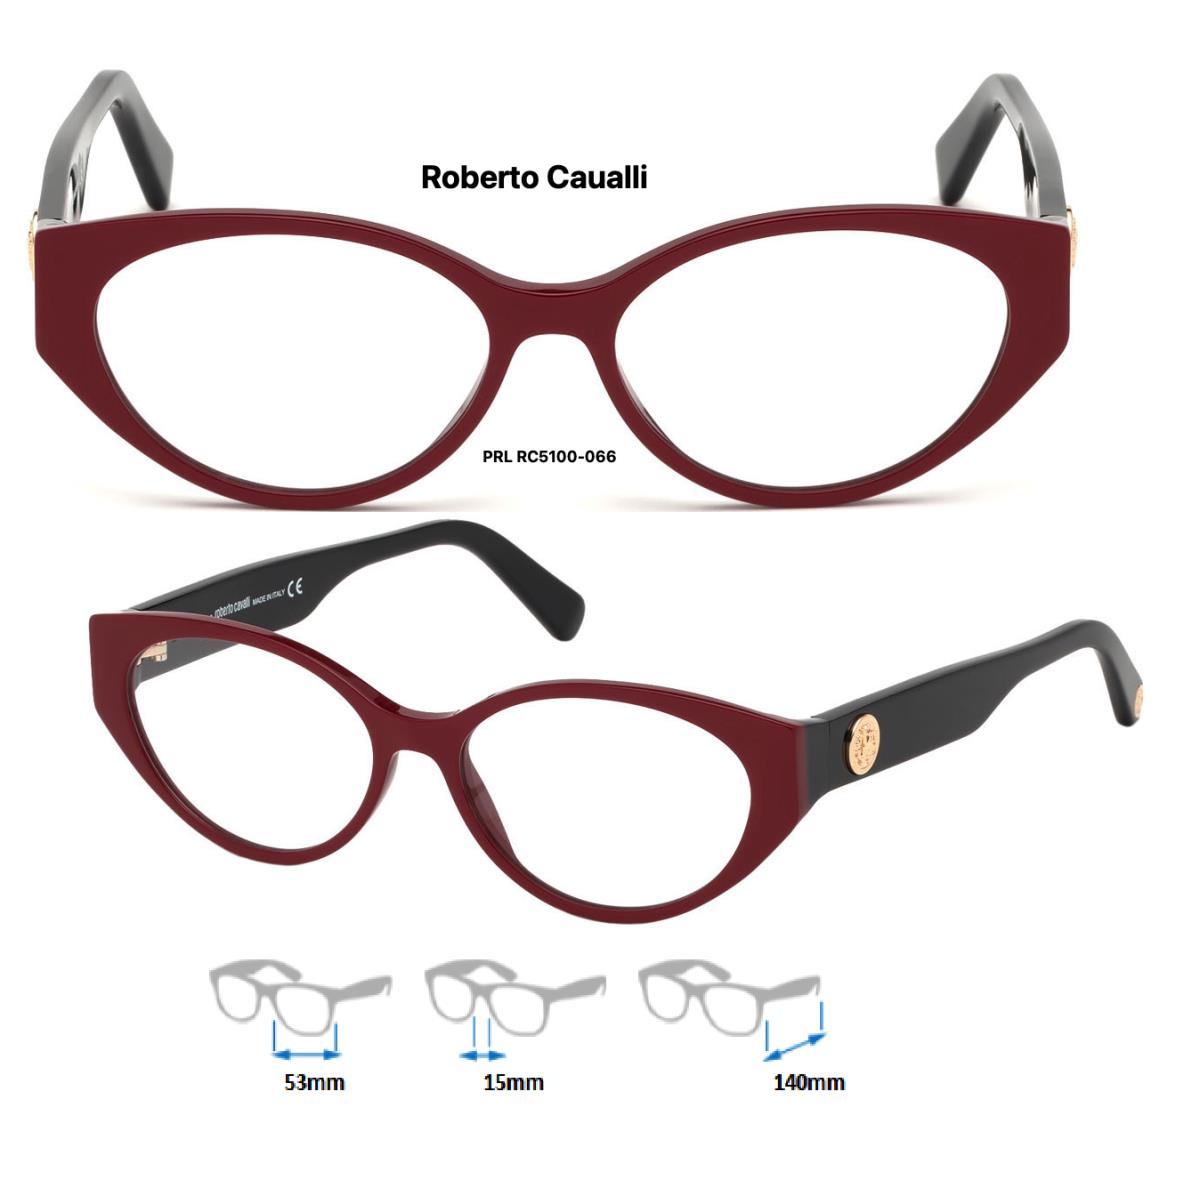 Roberto Cavalli RC5100 066 Eyeglass Frames Womens Shiny Red Size 53mm